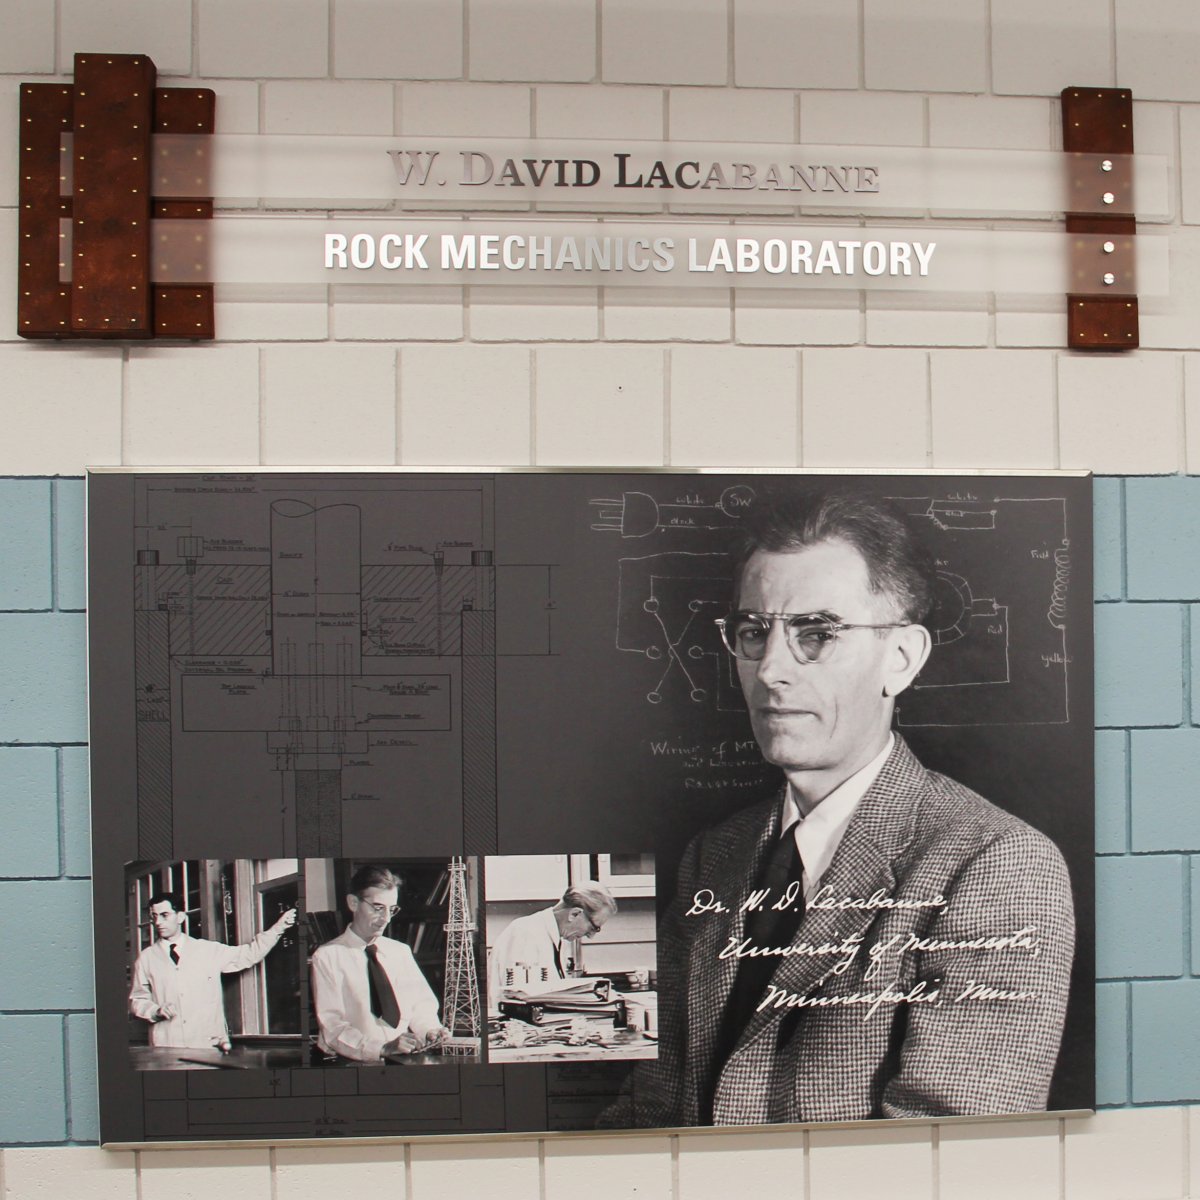 Lacabanne Rock Mechanics Laboratory sign